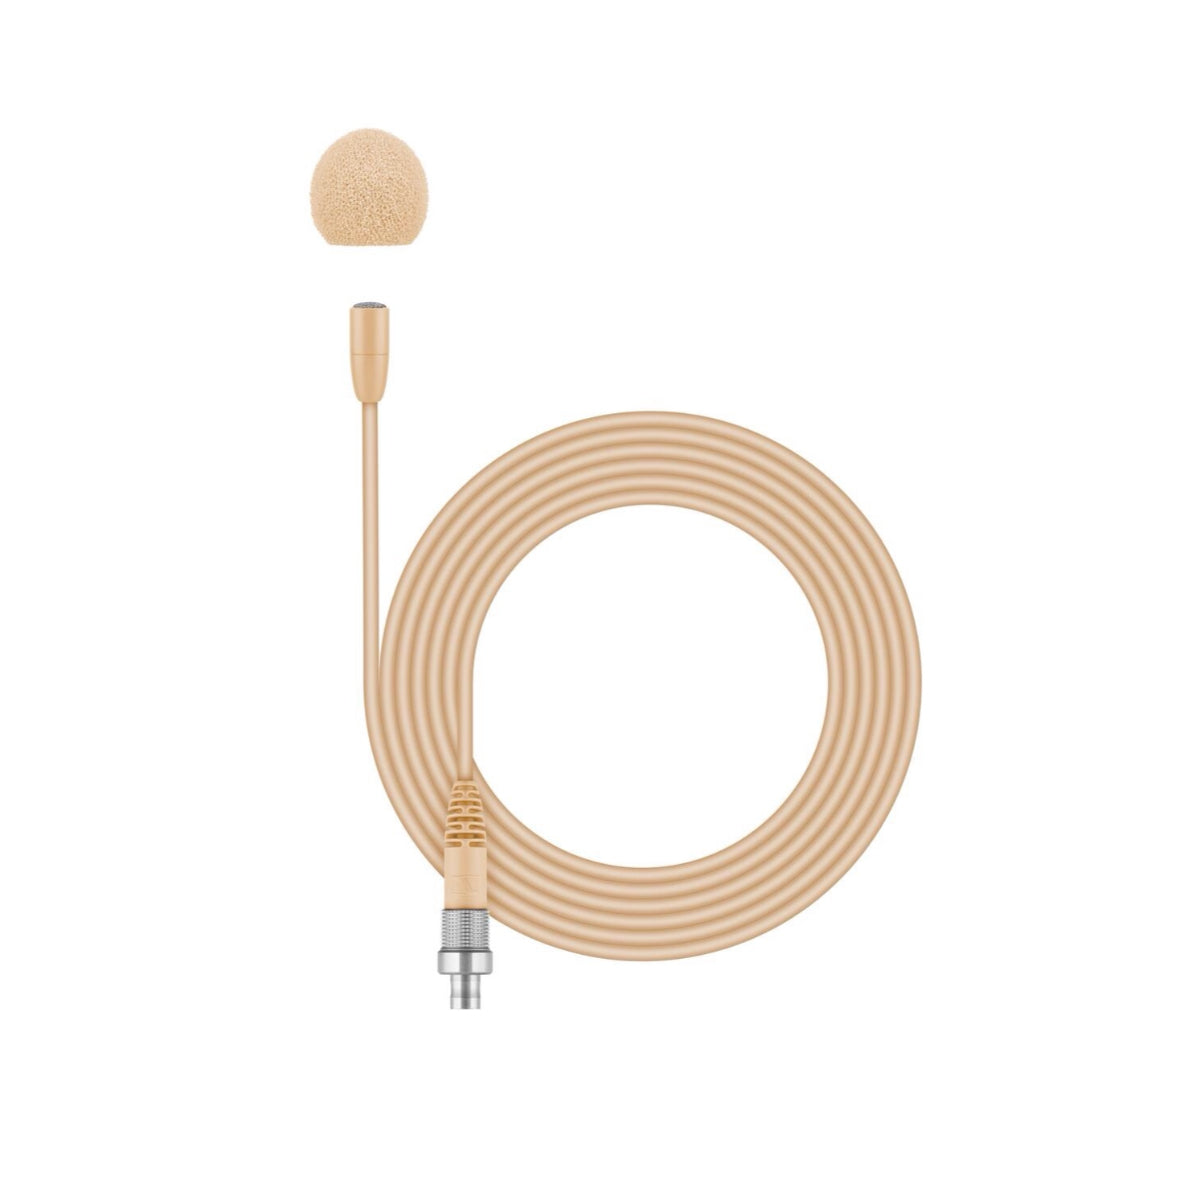 Sennheiser MKE Essential Omni-Beige 3-Pin, Lavalier Microphone, Omni-directional, Beige, 1.6m Cable